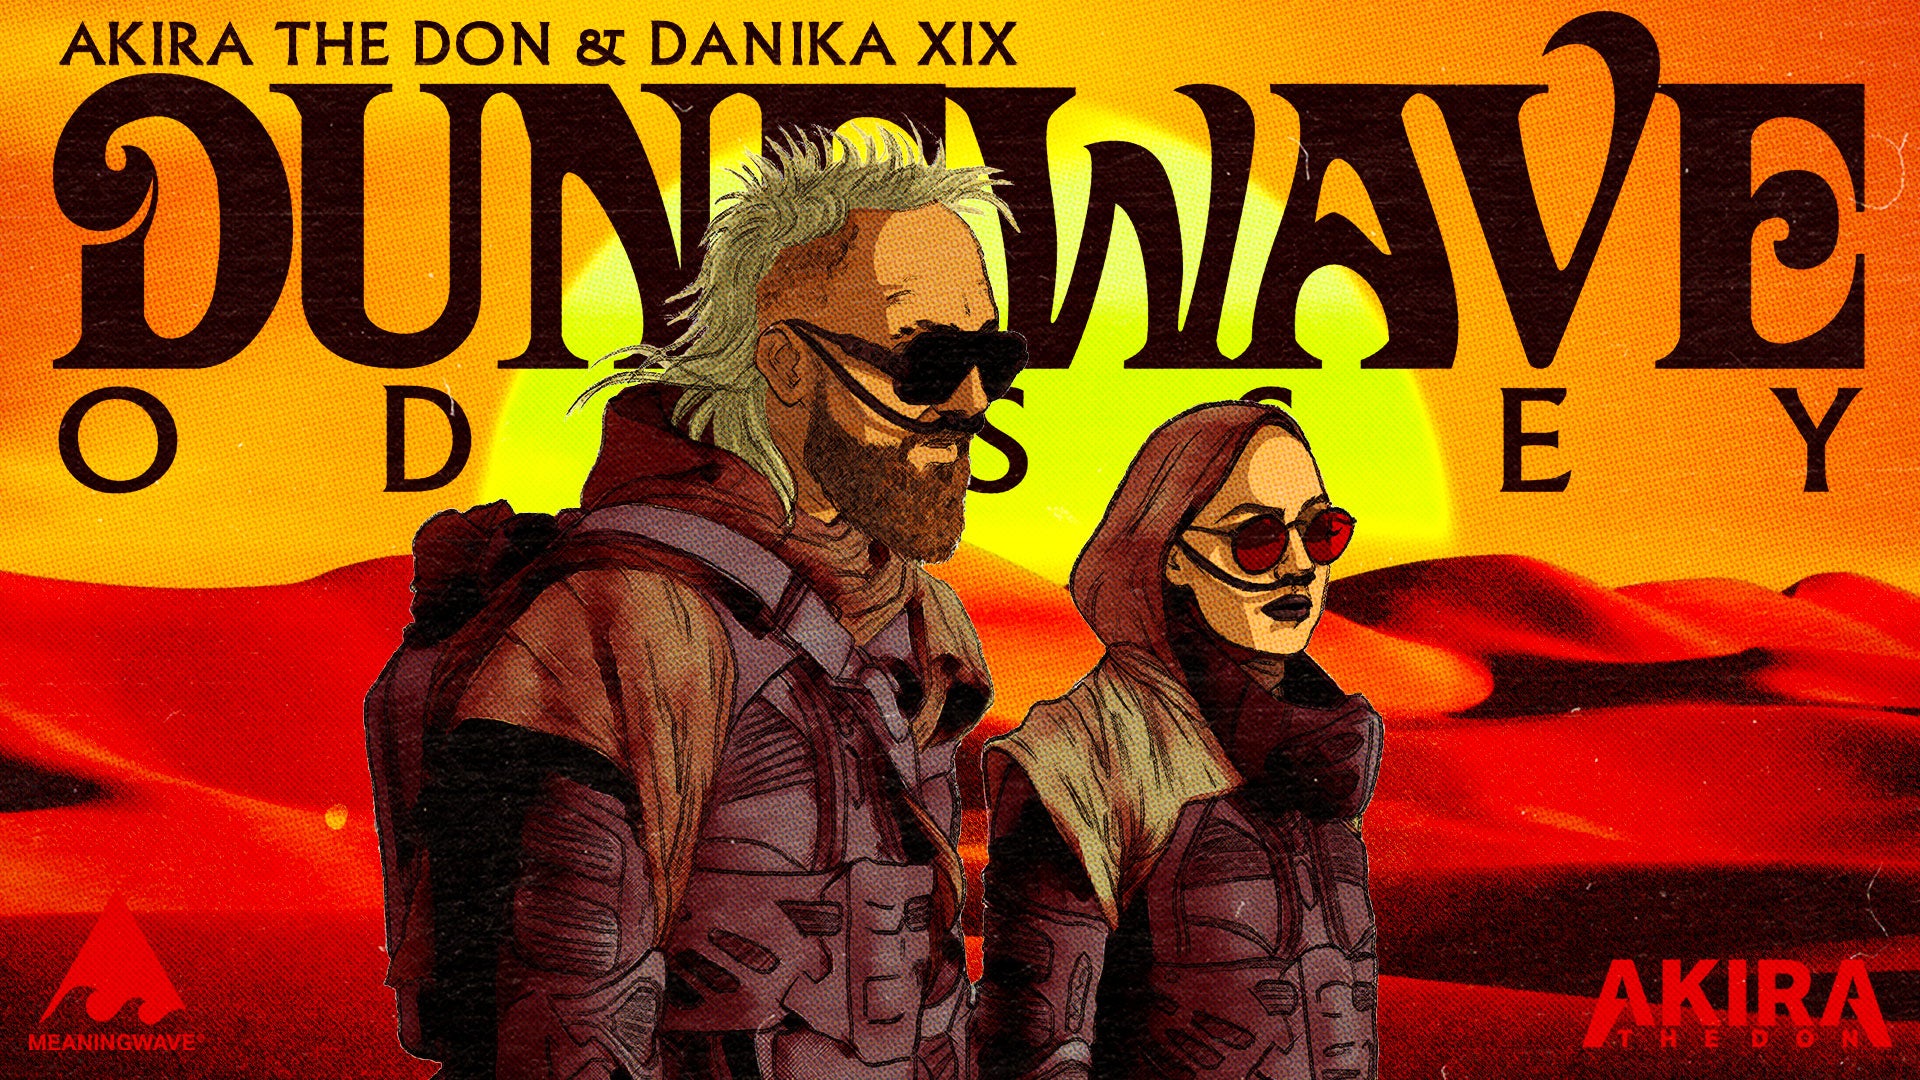 Akira The Don & Danika XIX - DUNEWAVE: ODYSSEY | Album